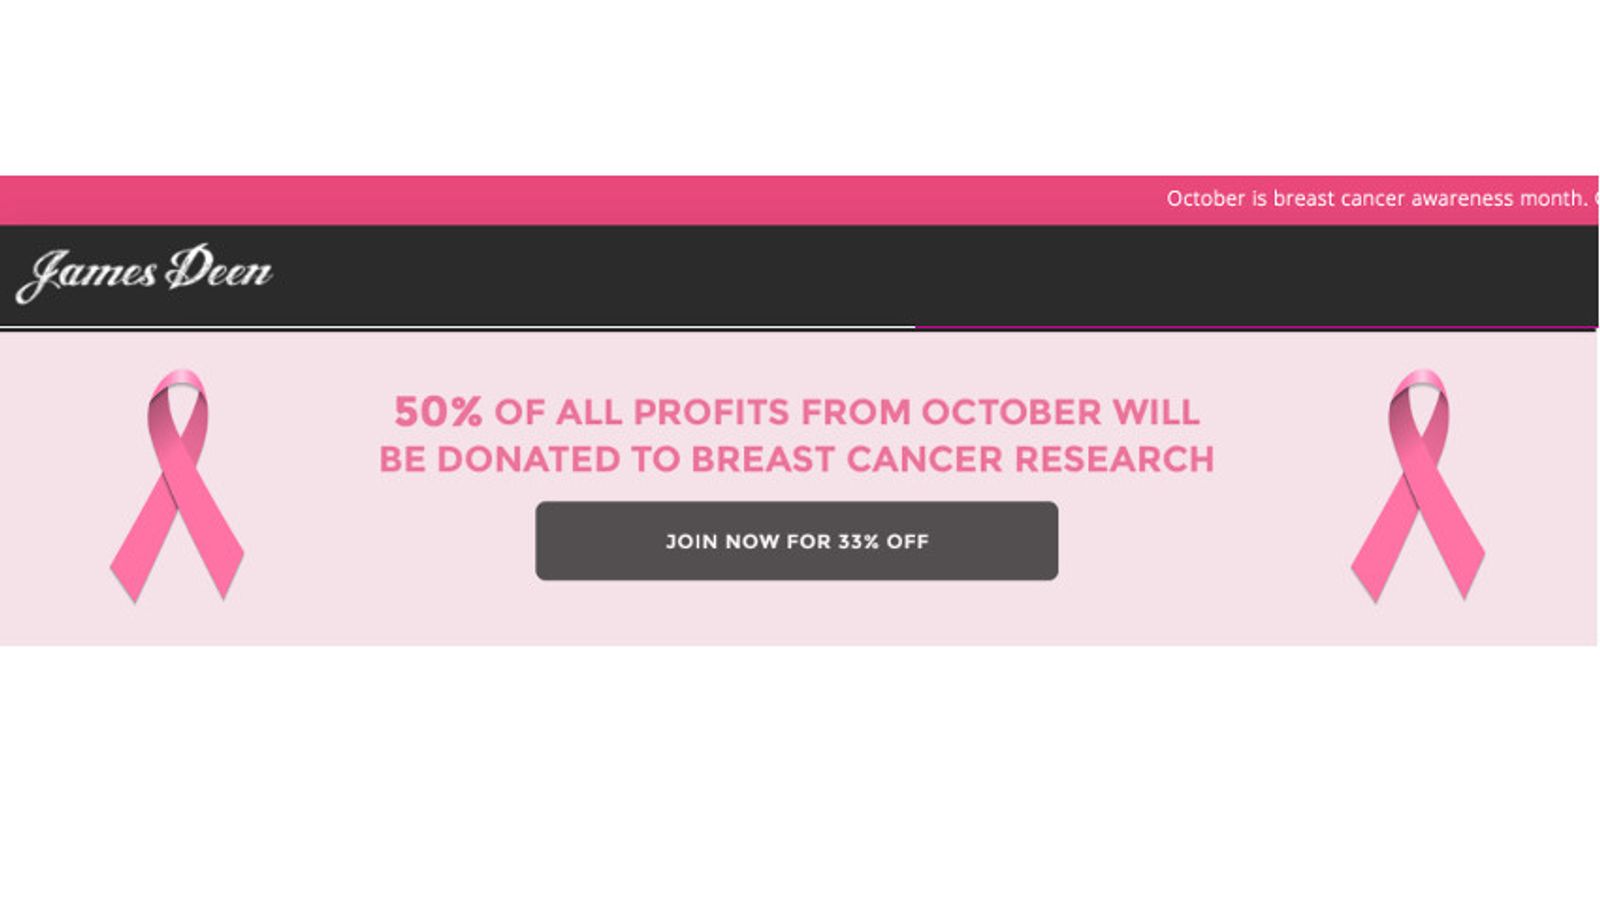 James Deen Raises Funds for Breast Cancer Awareness